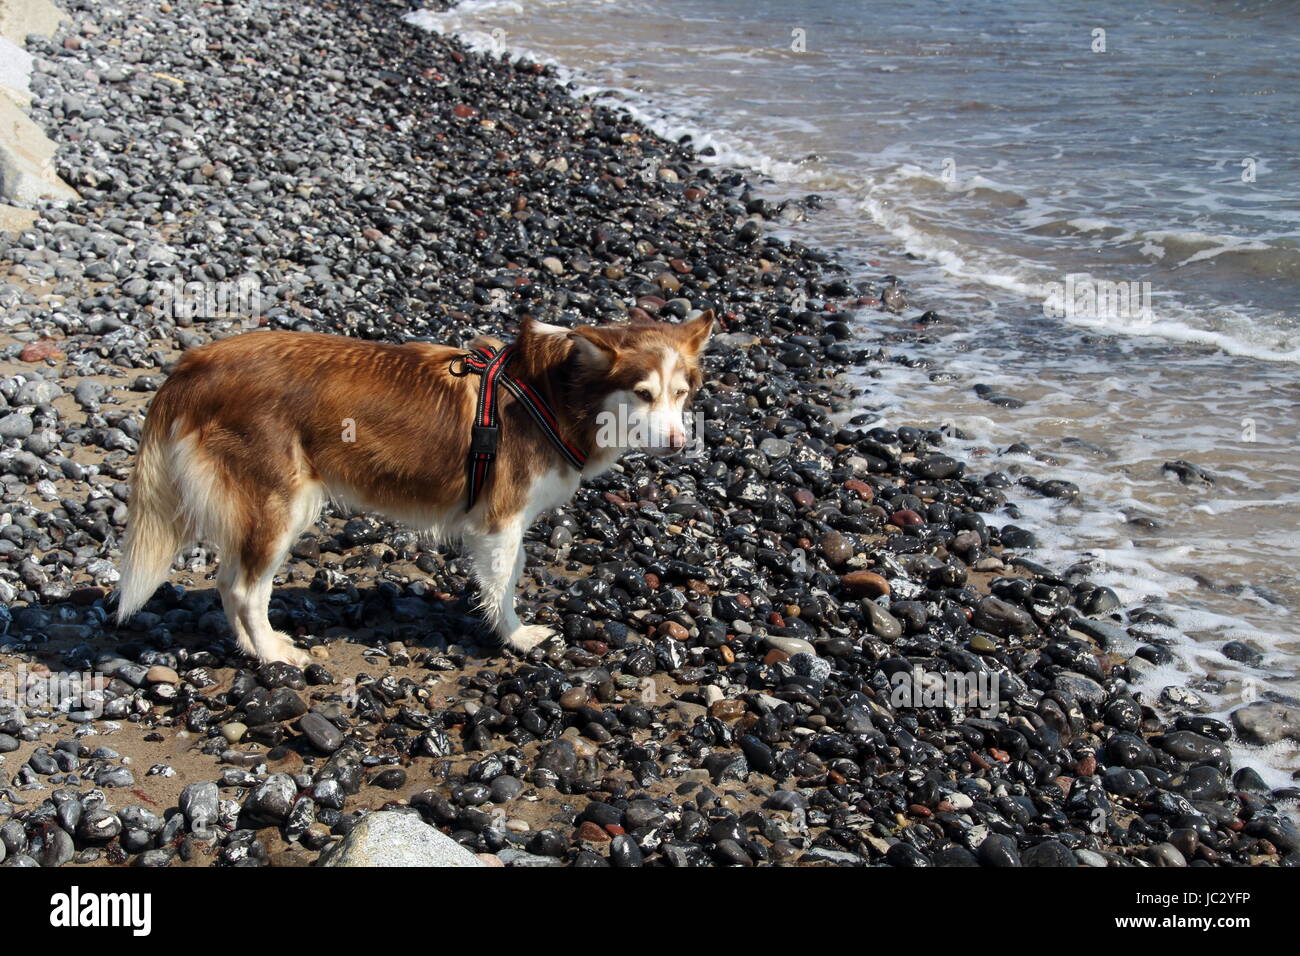 ocean dog Stock Photo